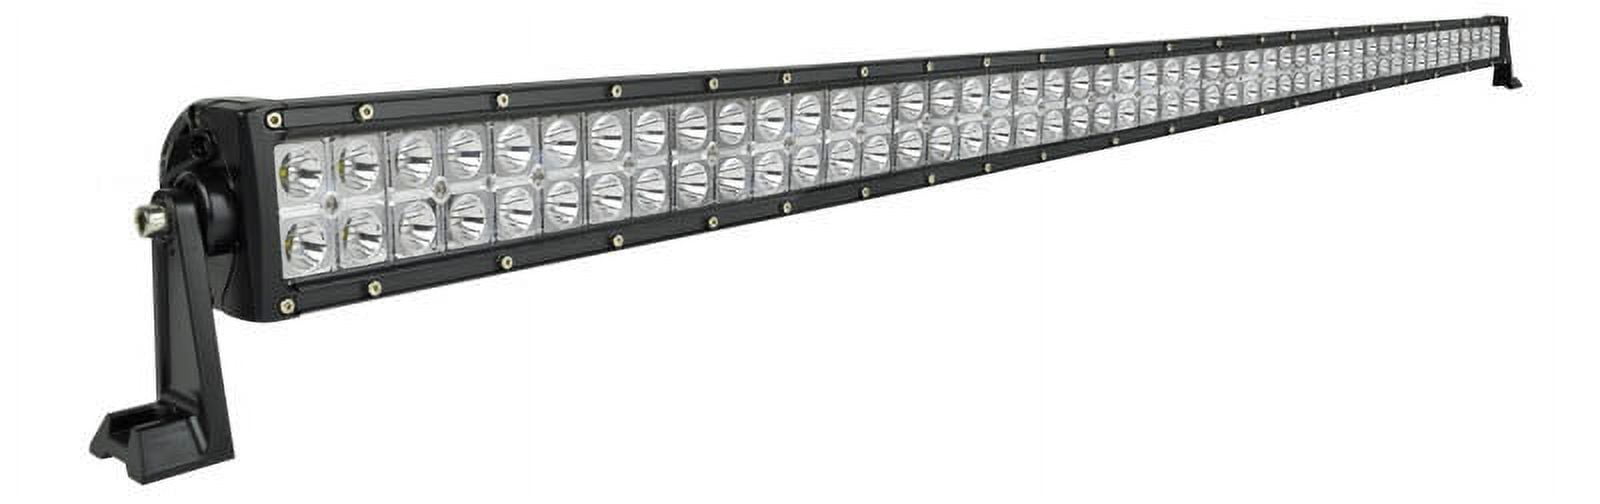 Voltage Automotive LED Light Bar 14 Inch 72W With 4D Lens 6000K